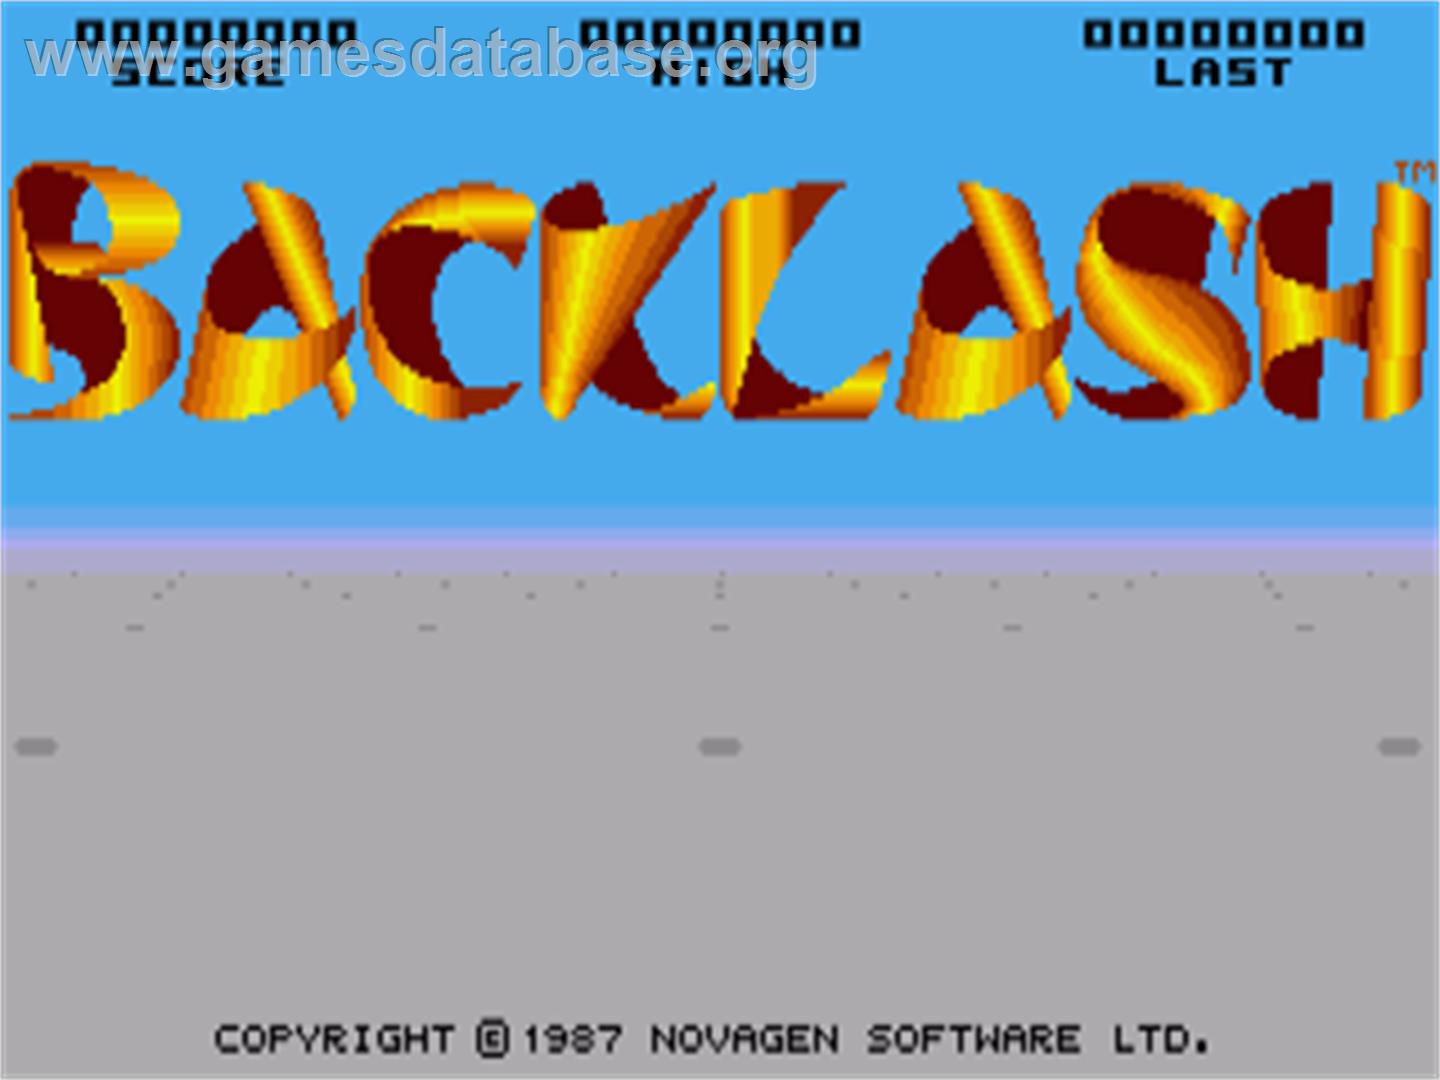 Backlash - Commodore Amiga - Artwork - Title Screen